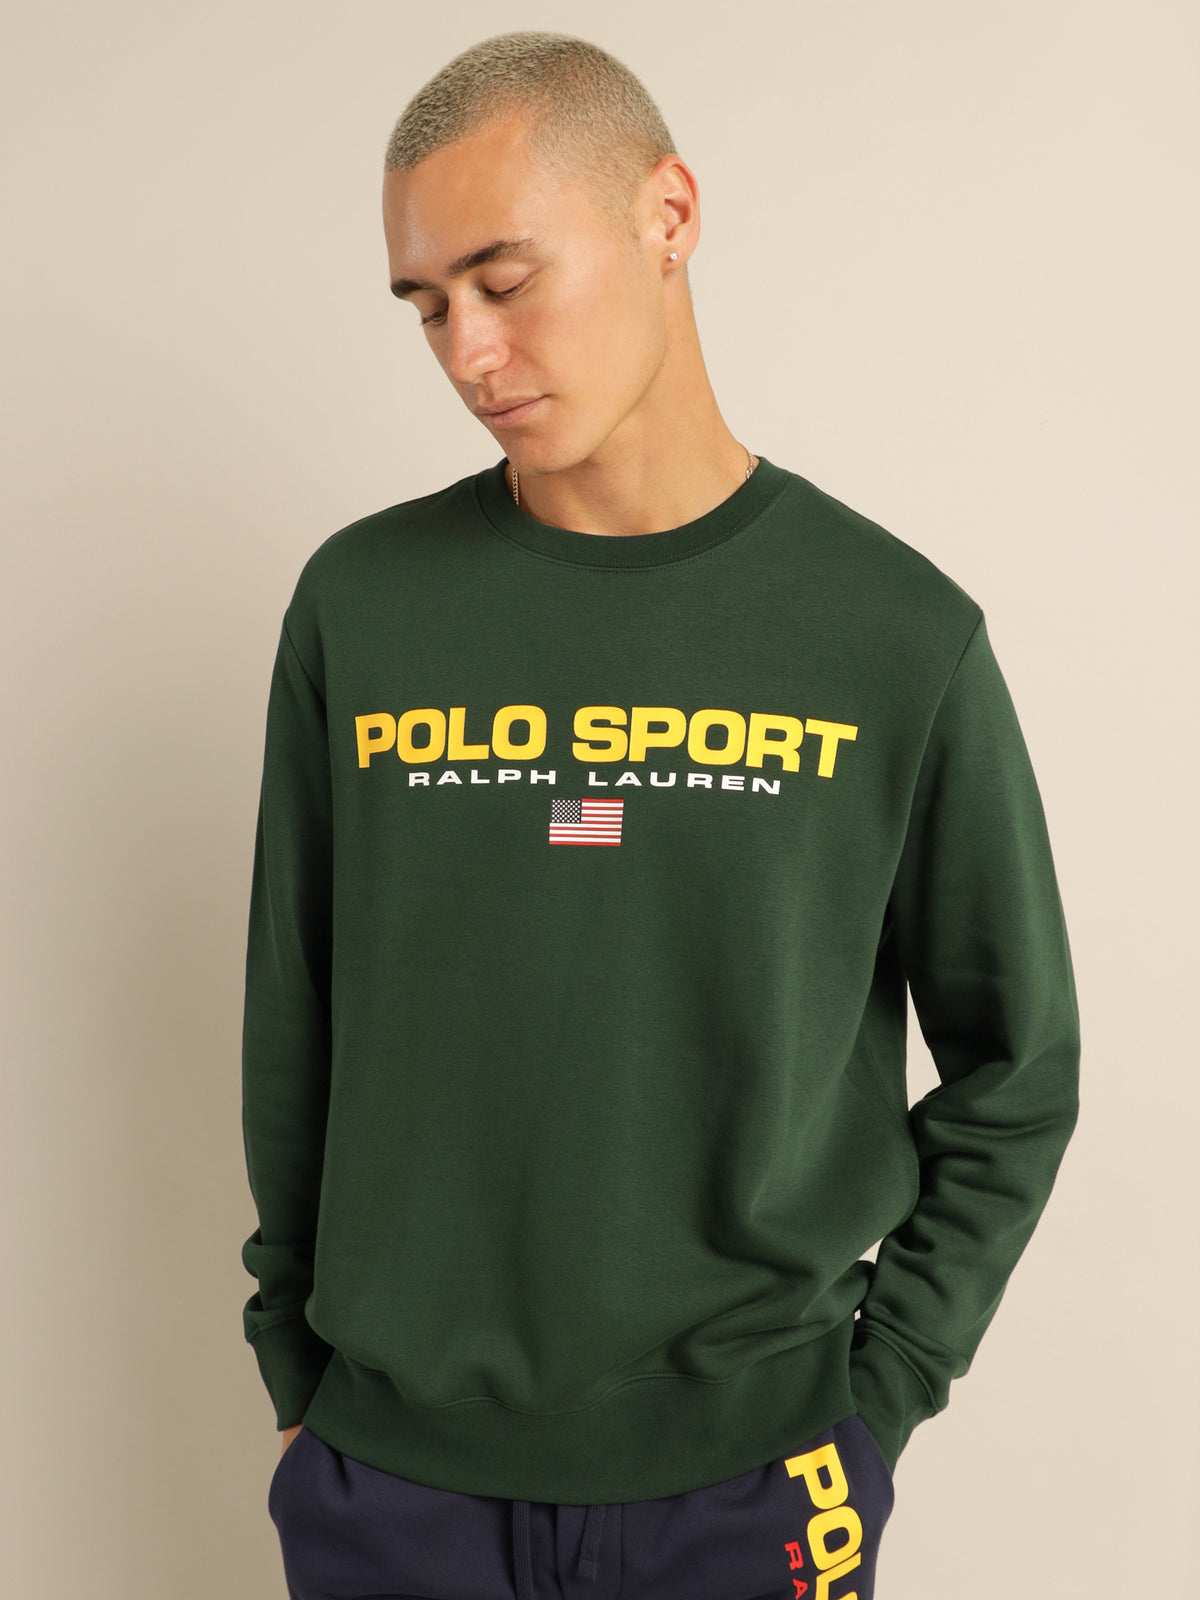 Polo Sport Fleece in College Green